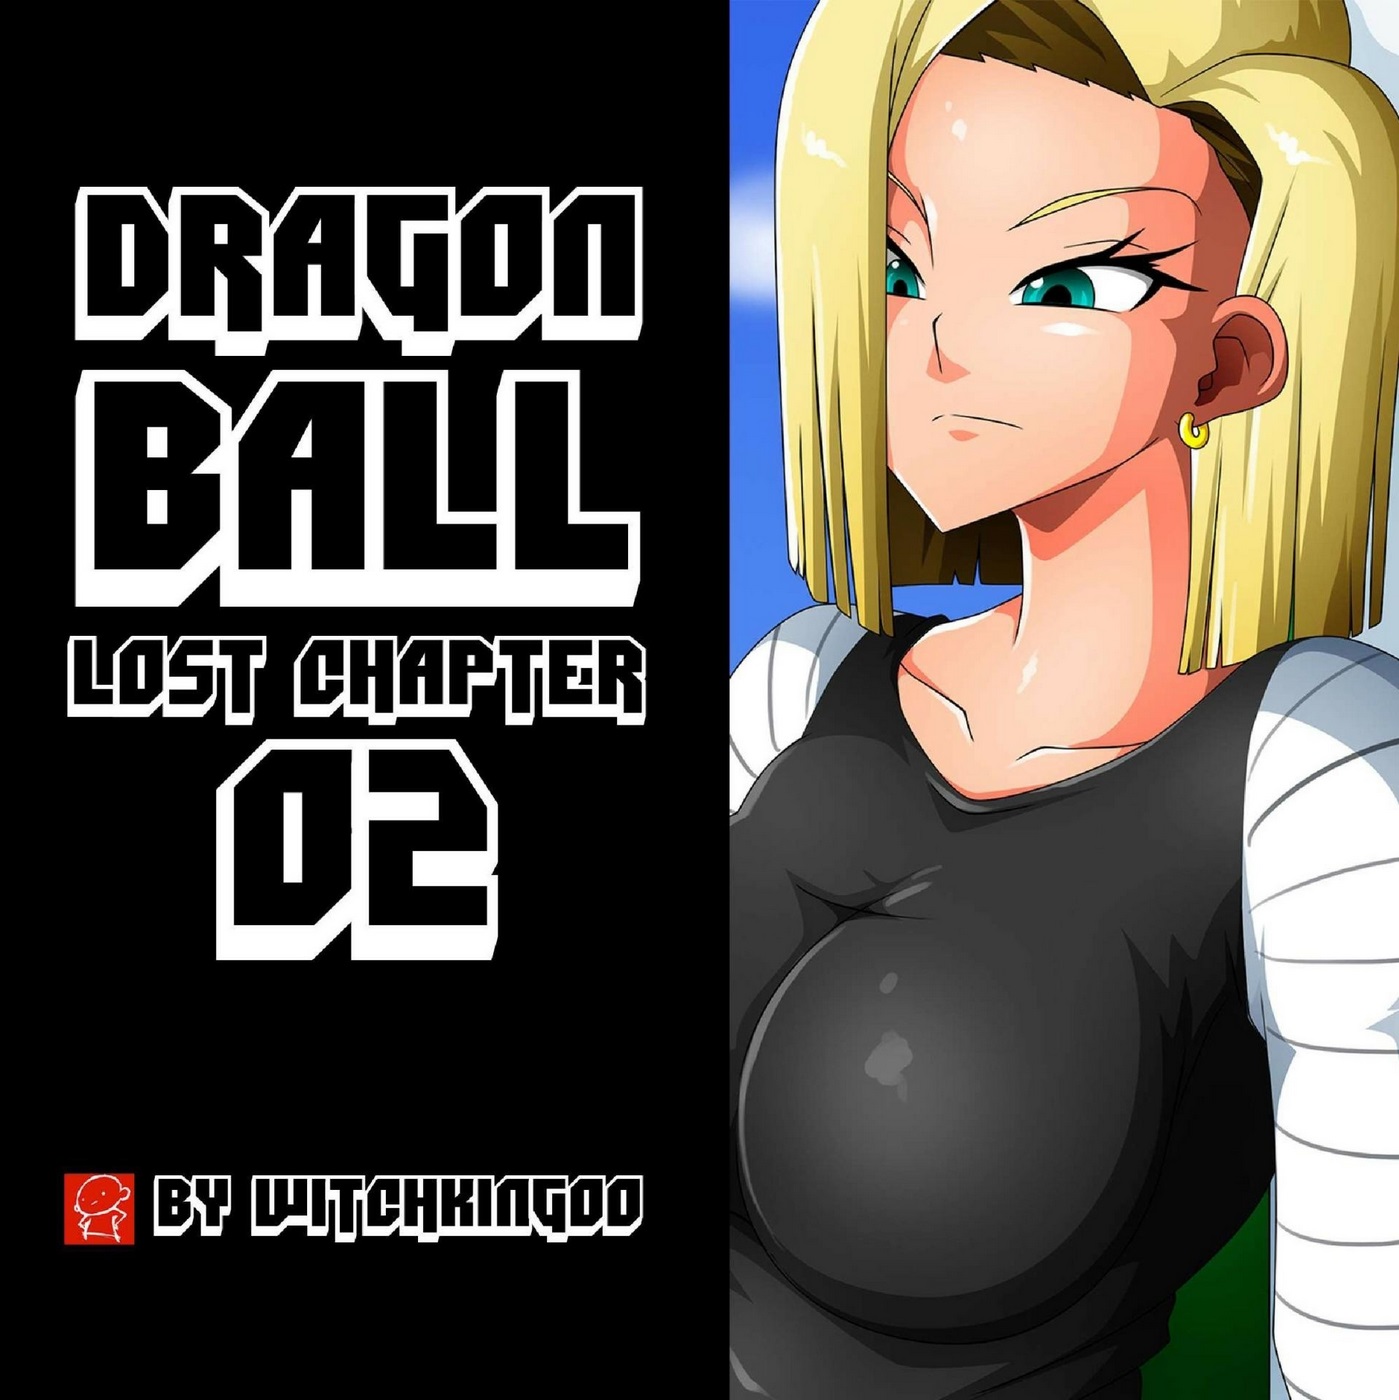 dragonball verloren hoofdstuk 02 witchking00